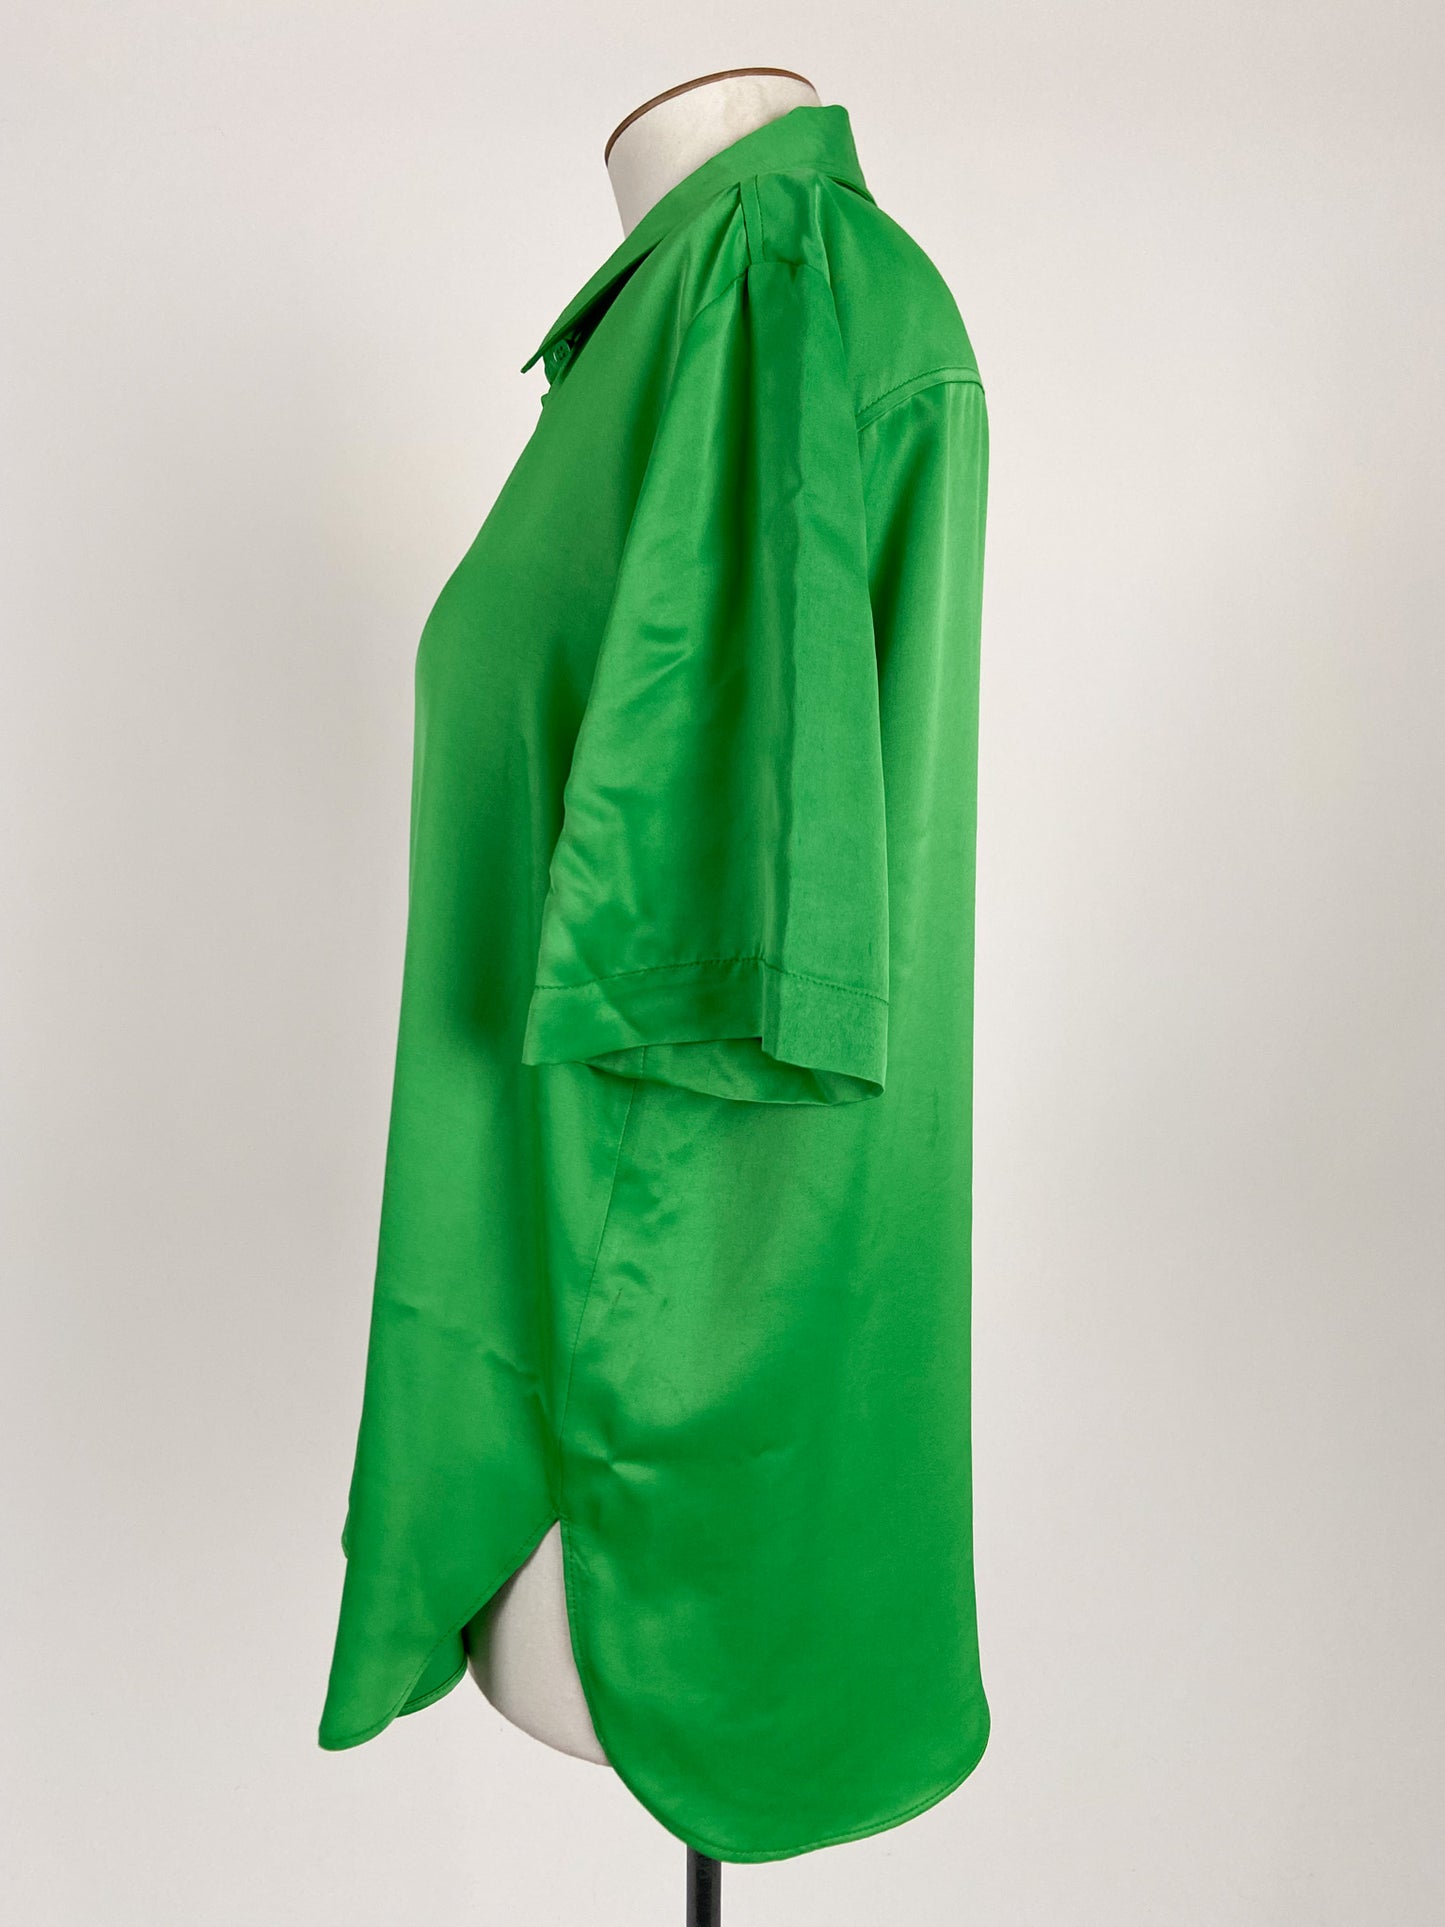 Zara | Green Casual/Workwear Top | Size XL